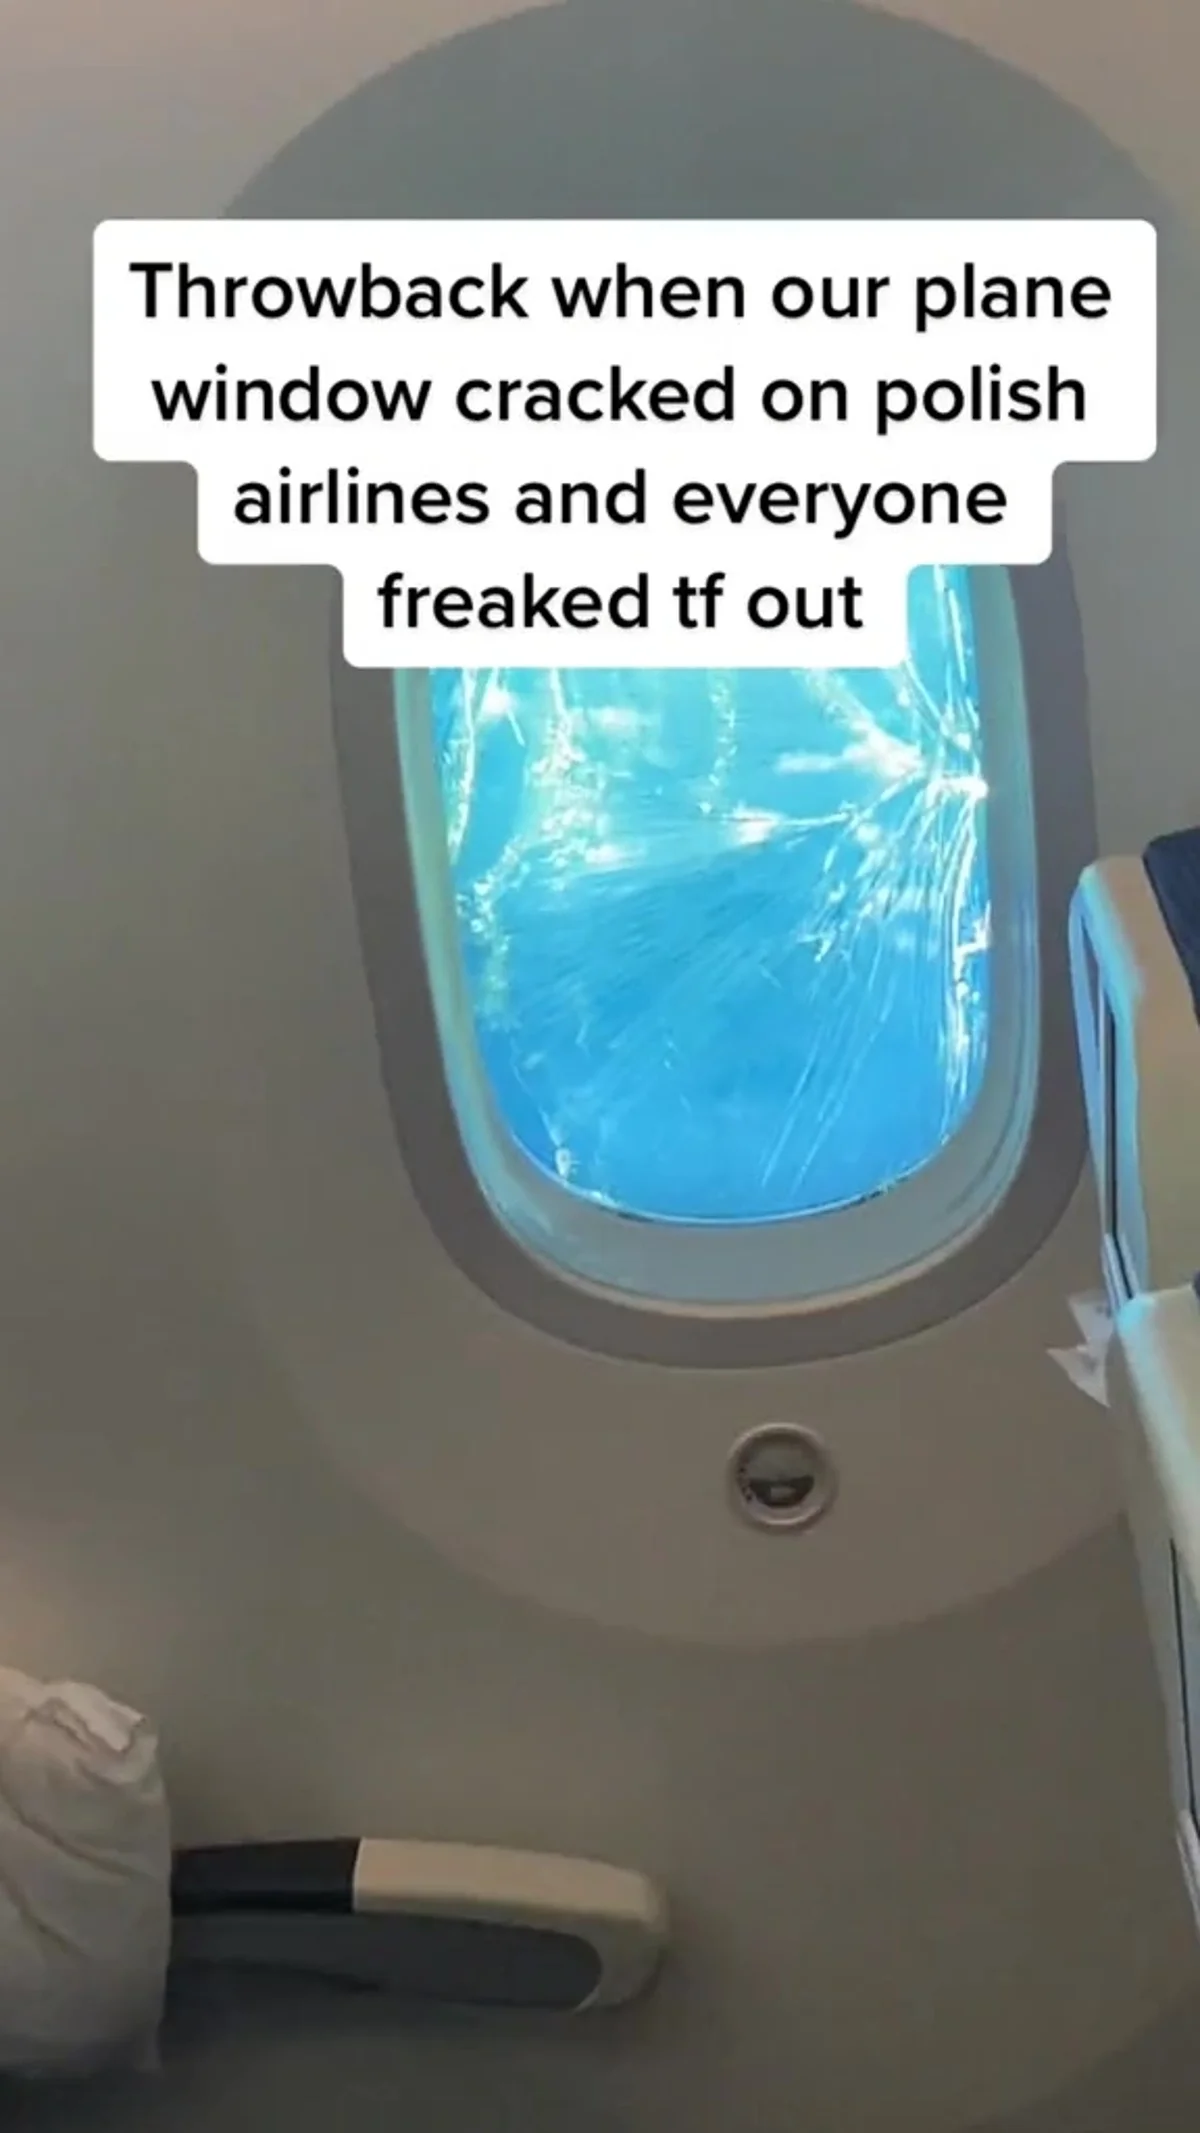 Passengers panic and shout as plane window cracks mid-flight